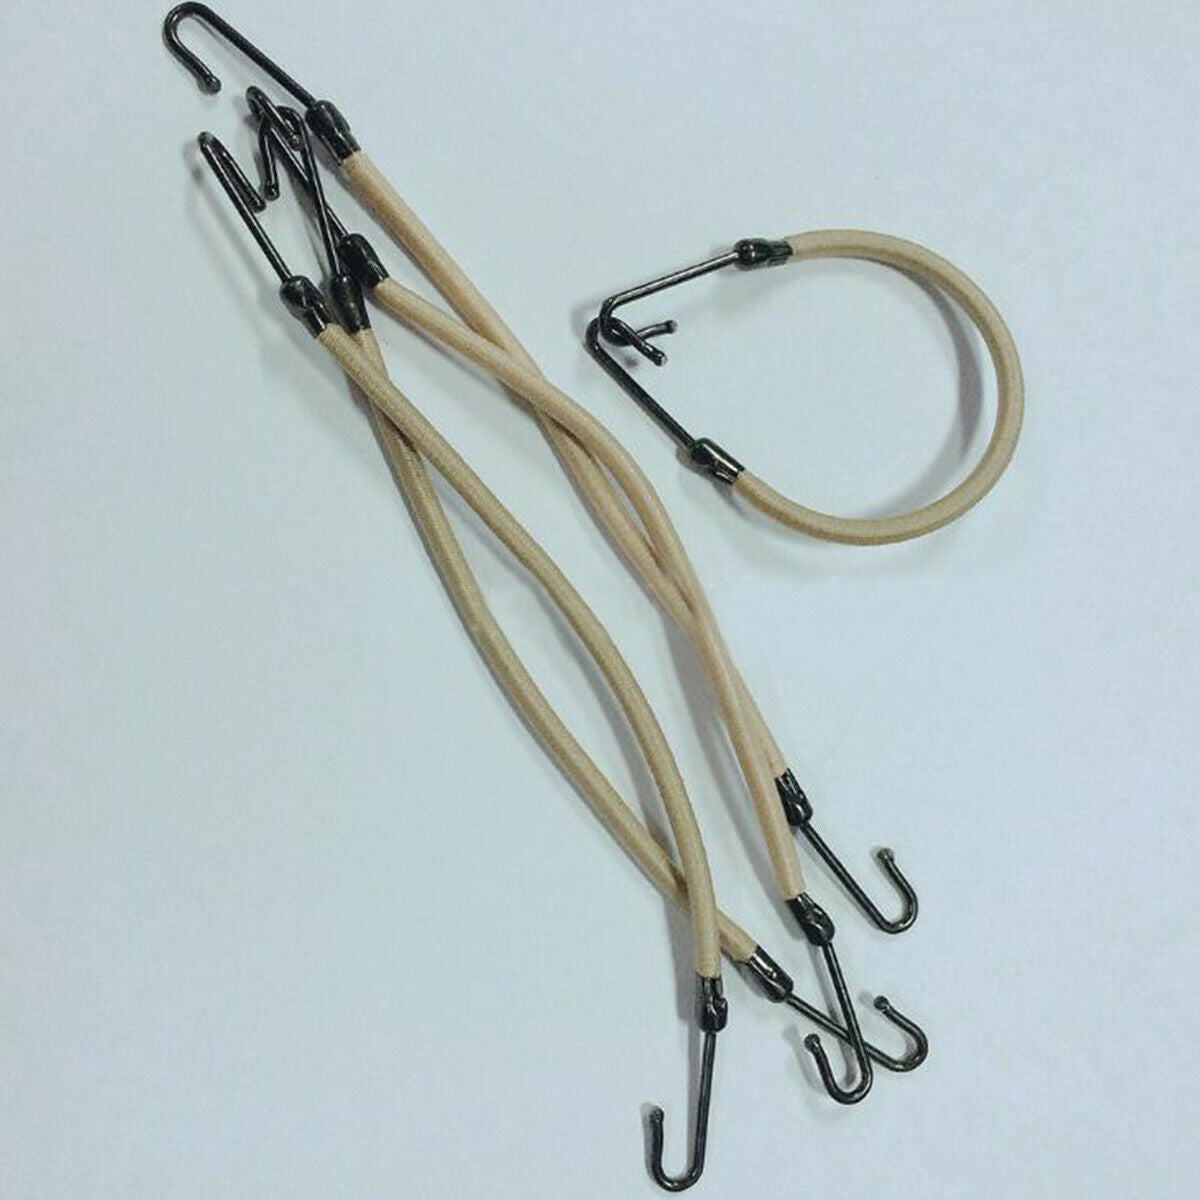 10pcs Ponytail Hooks Holder Bungee Bands Rubber Bands Hooks Hair Styling Beige